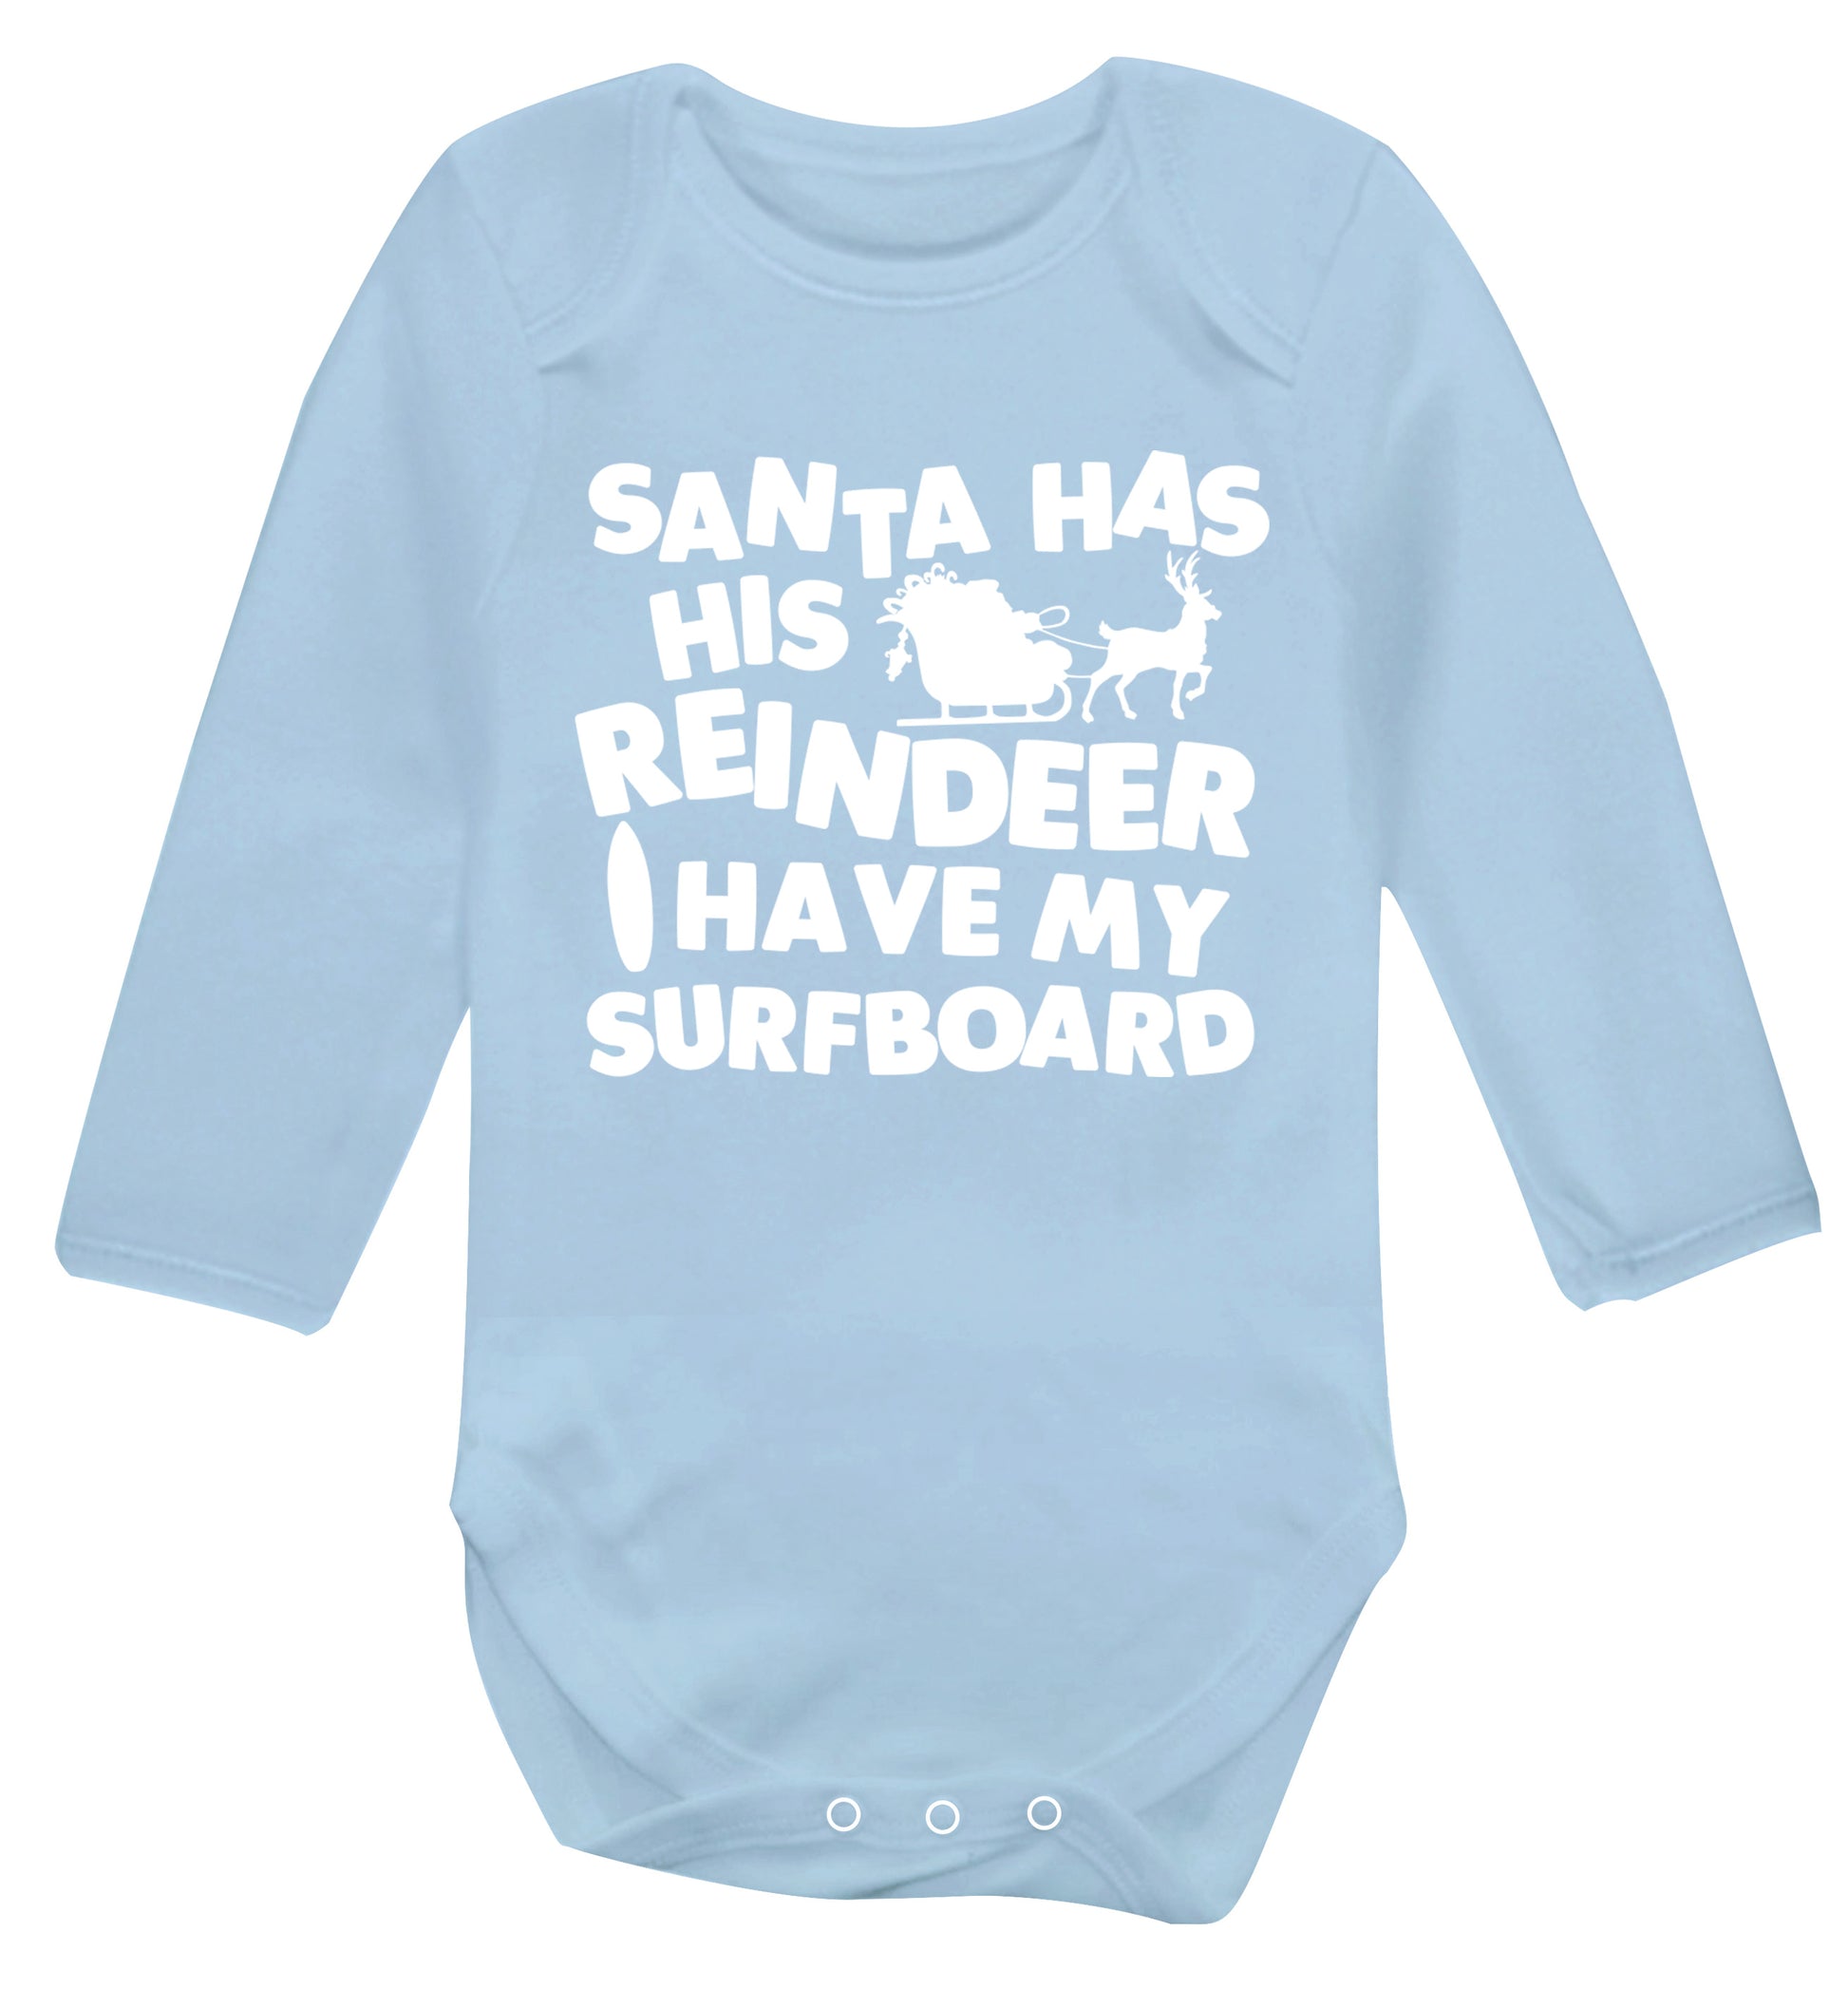 Santa has his reindeer I have my surfboard Baby Vest long sleeved pale blue 6-12 months